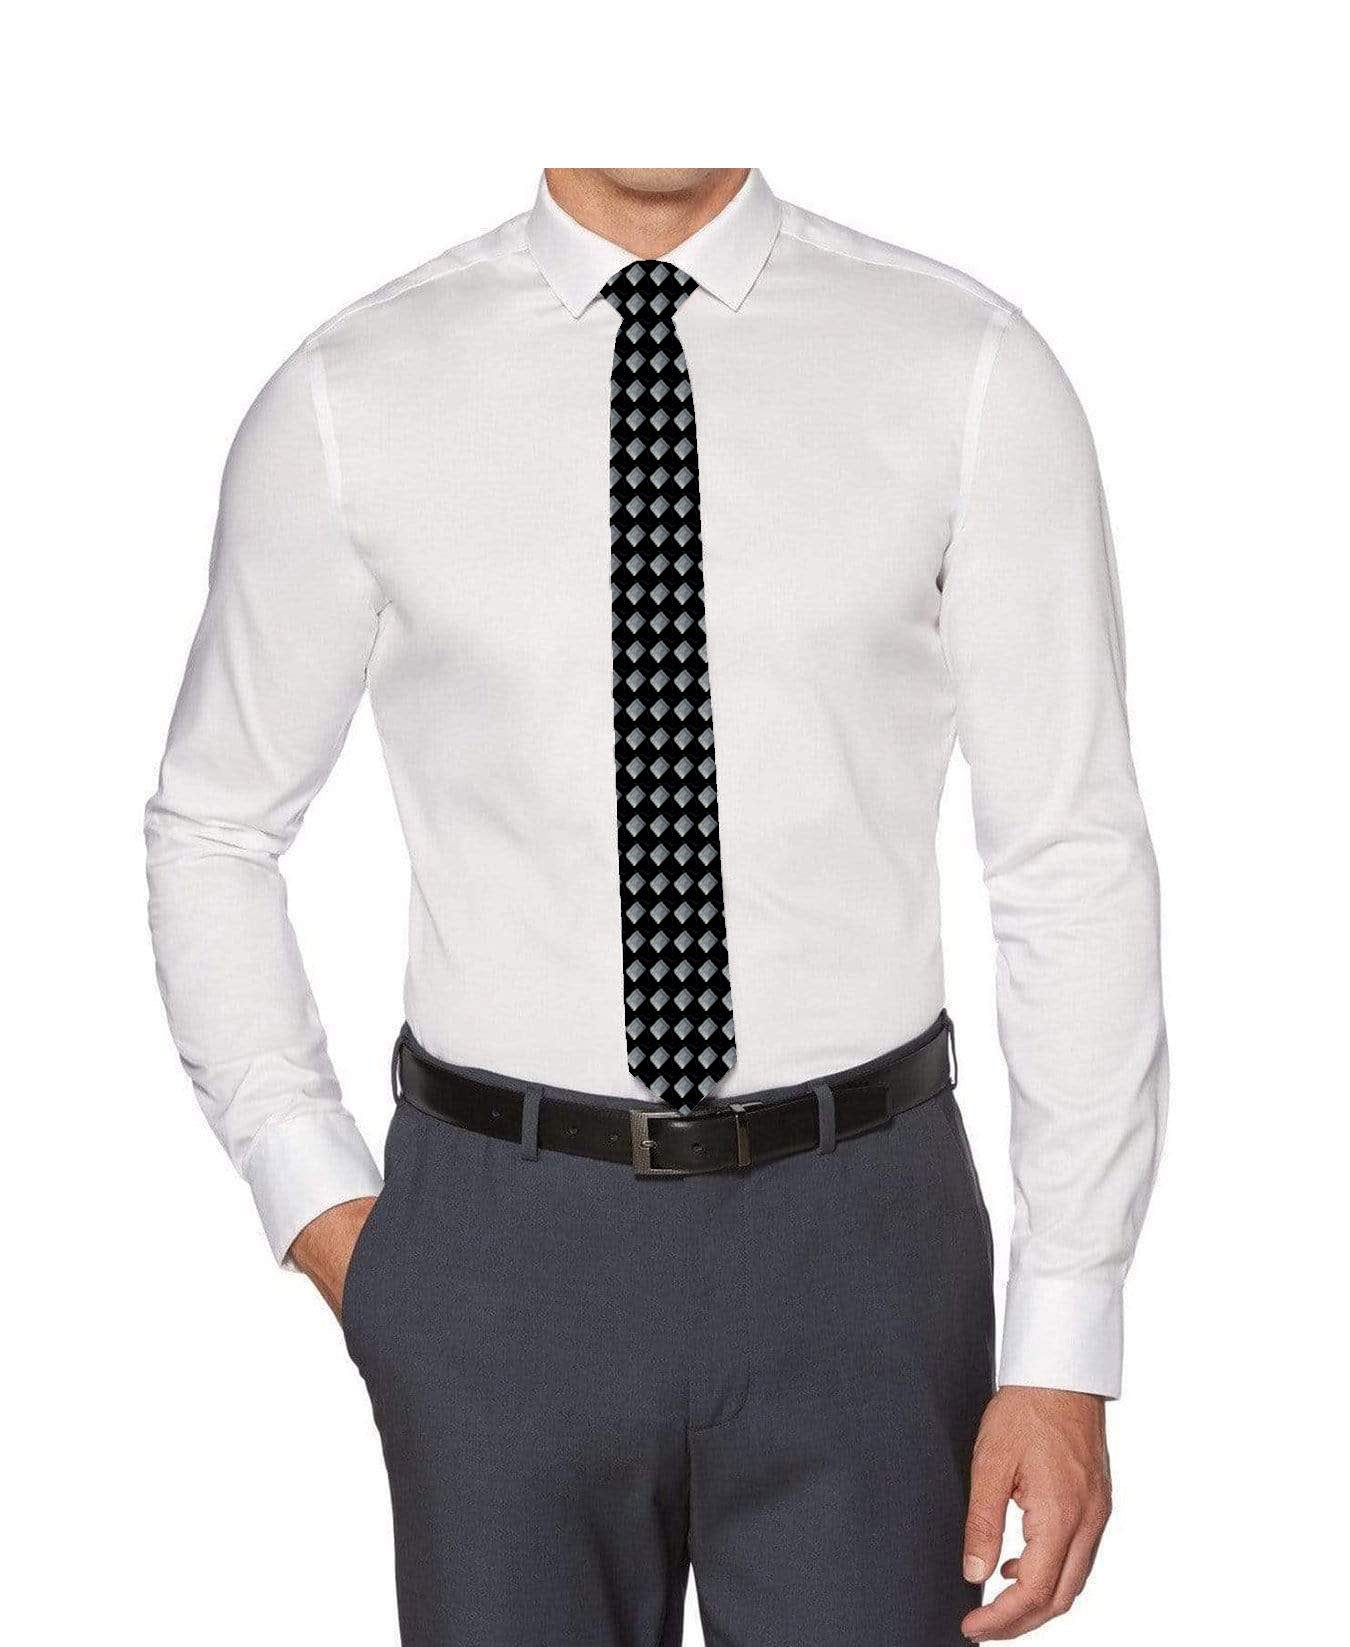 Perry Ellis Boys Dress Shirts w Lt Grey Tie Solid Shirts w Patterned Tie